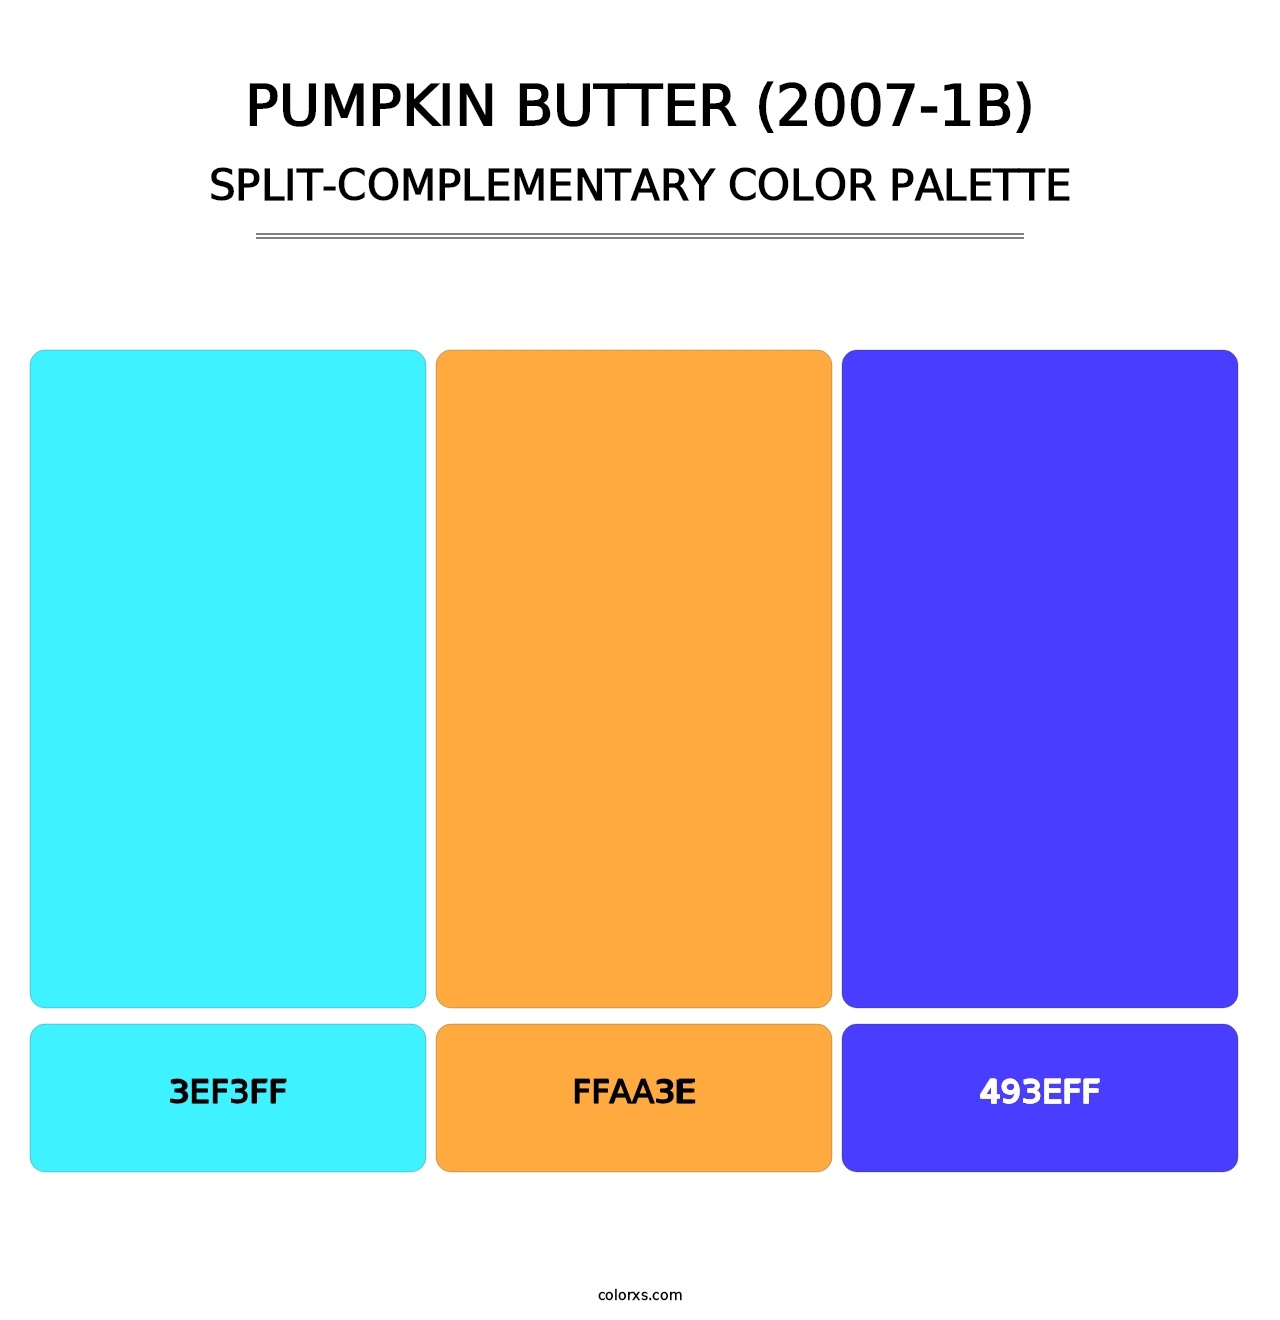 Pumpkin Butter (2007-1B) - Split-Complementary Color Palette